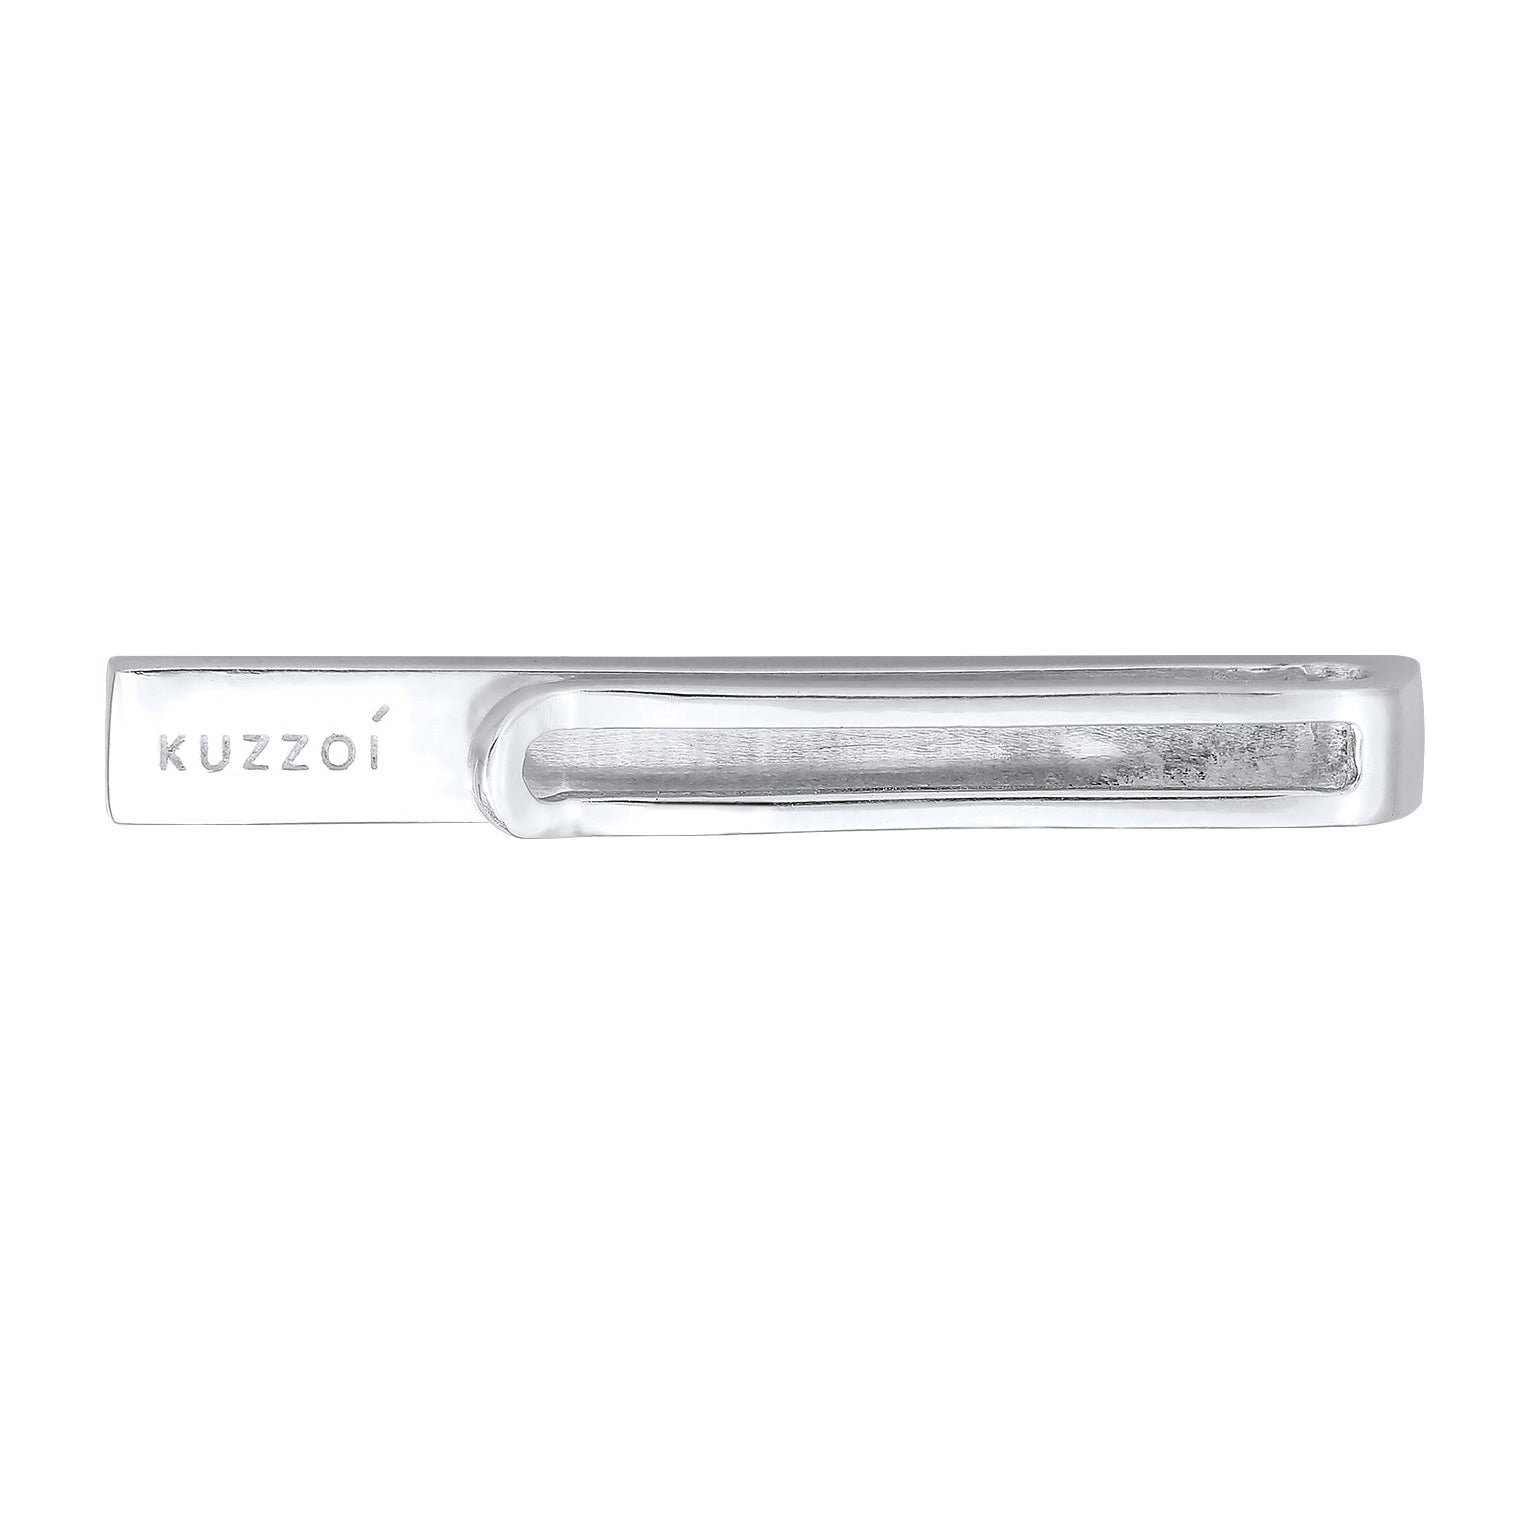 Silber - KUZZOI | Krawattennadel Rillen Design | Emaille | 925 Sterling Silber